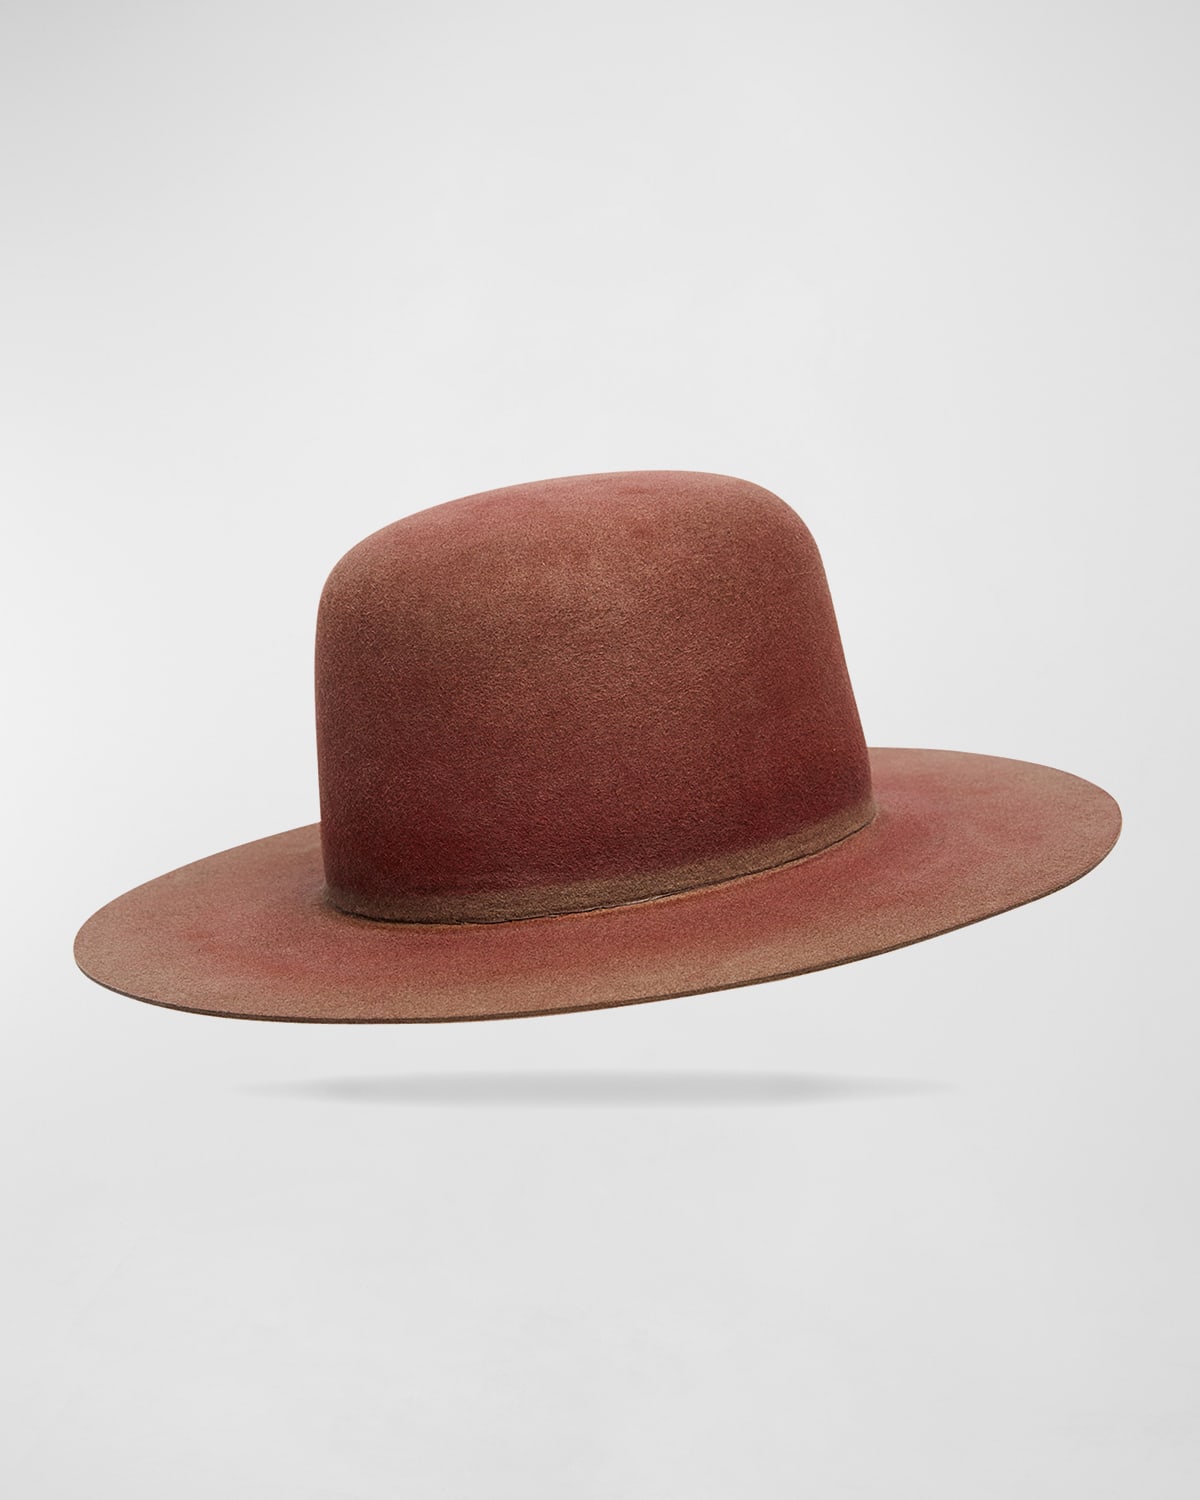 Men's Ombre Beaver Felt Fedora Hat